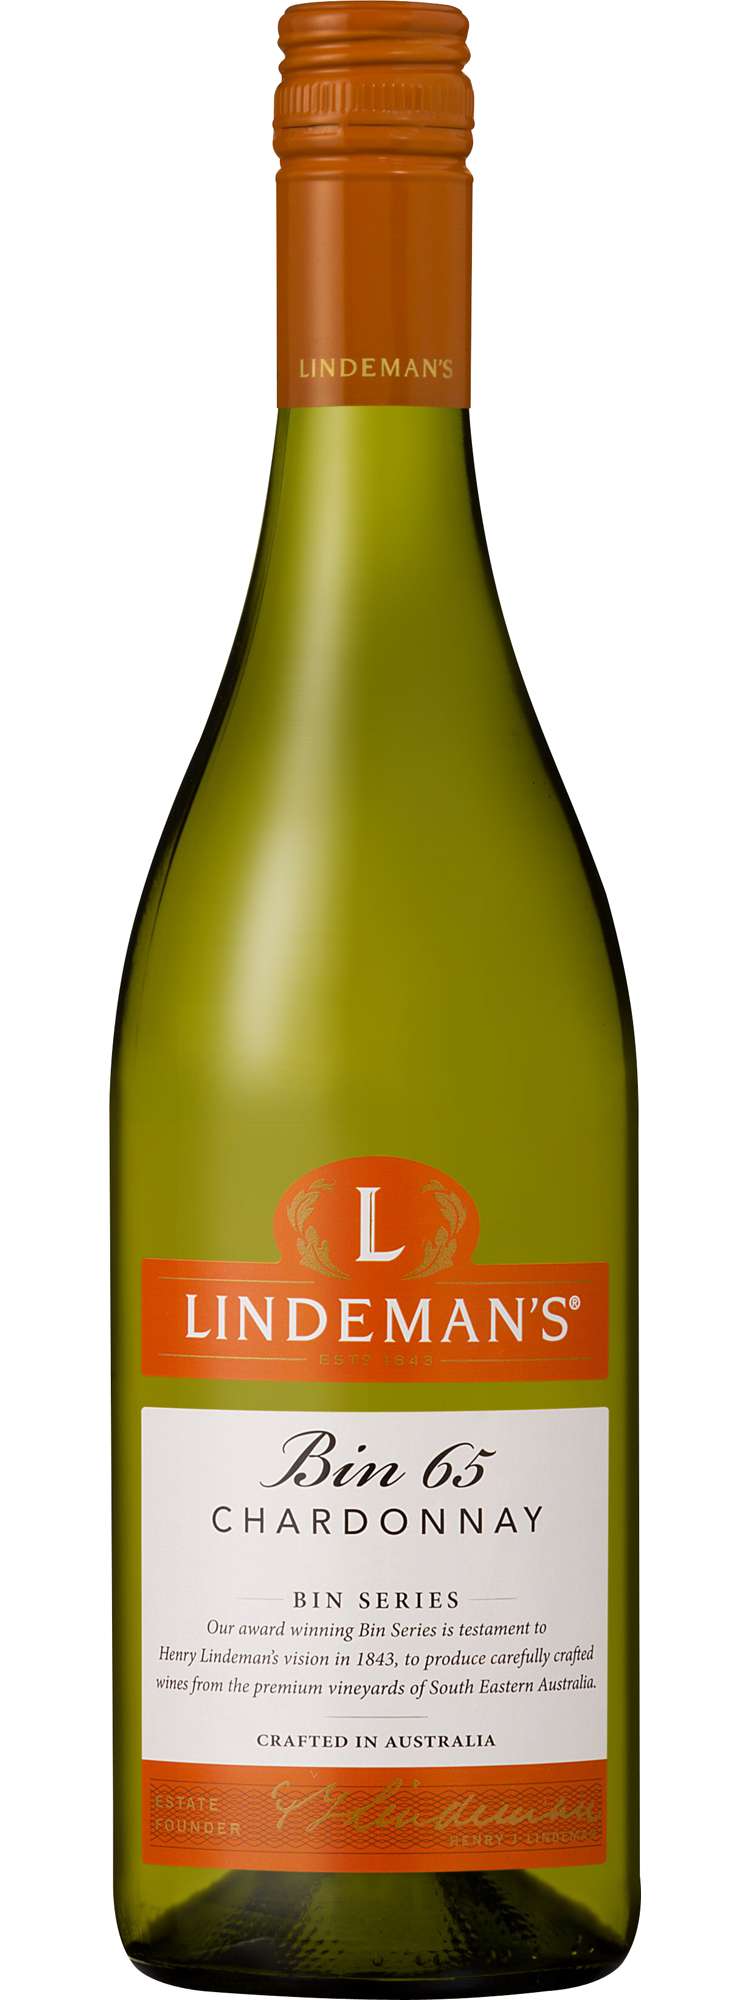 Lindeman's bin 65 Chardonnay (Australia) 2016 75cl